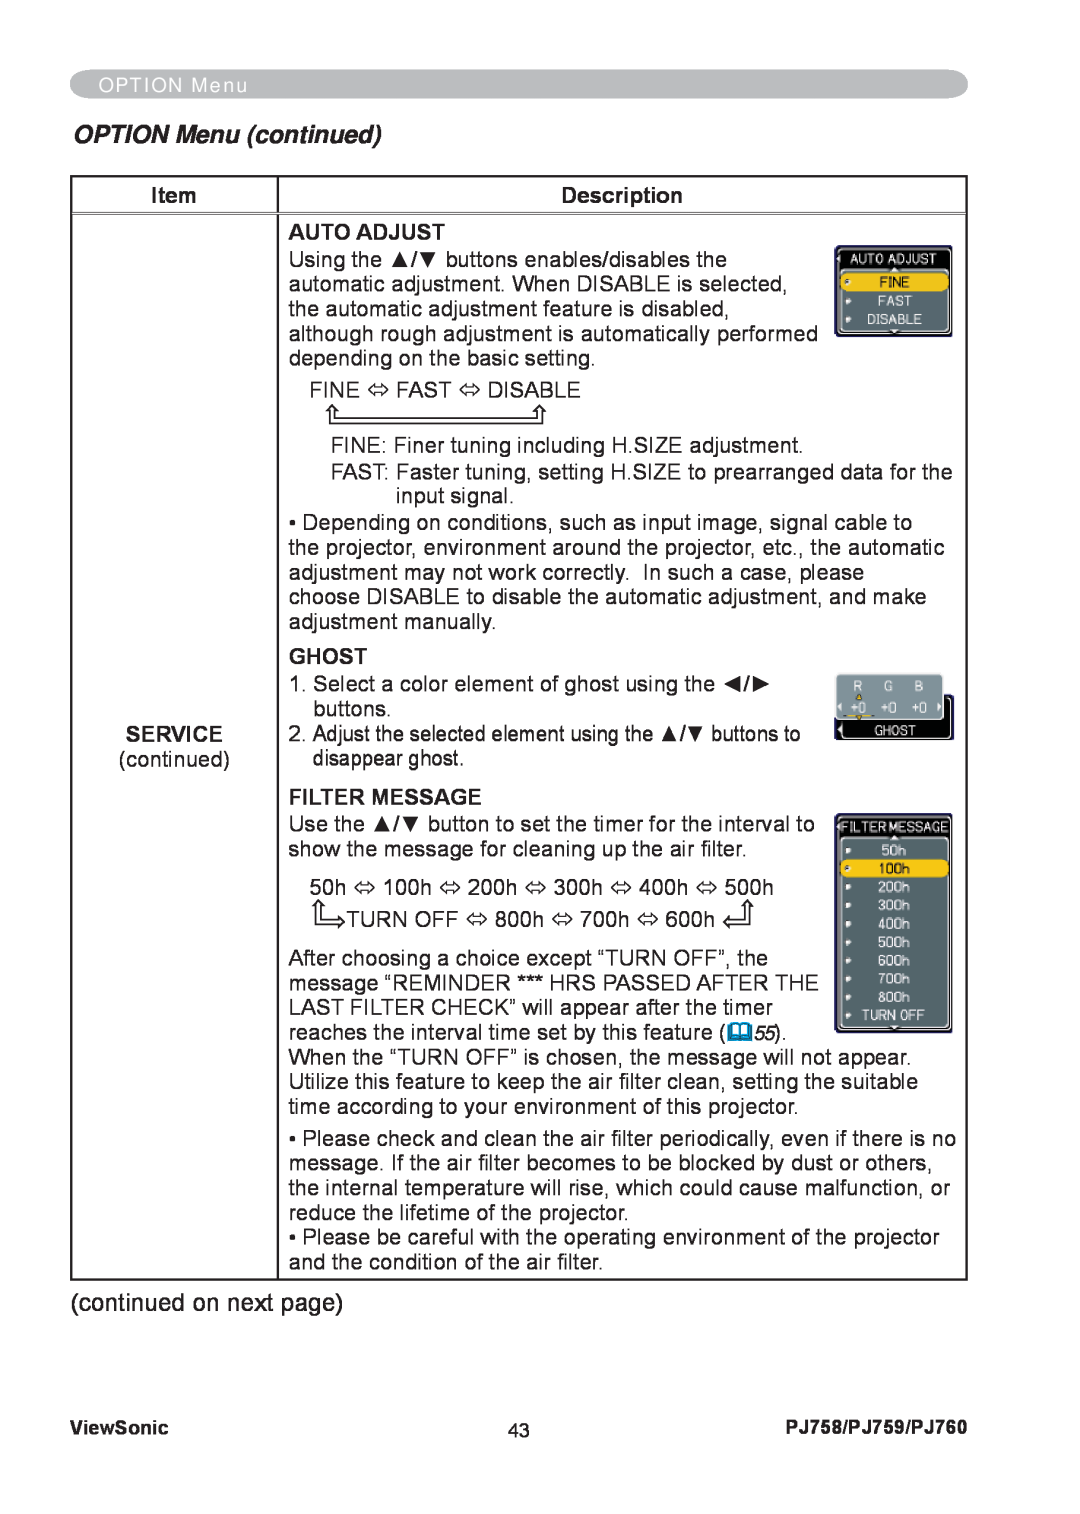 ViewSonic PJ758/PJ759/PJ760 manual OPTION Menu continued, Description, Auto Adjust, Ghost, Service, Filter Message 